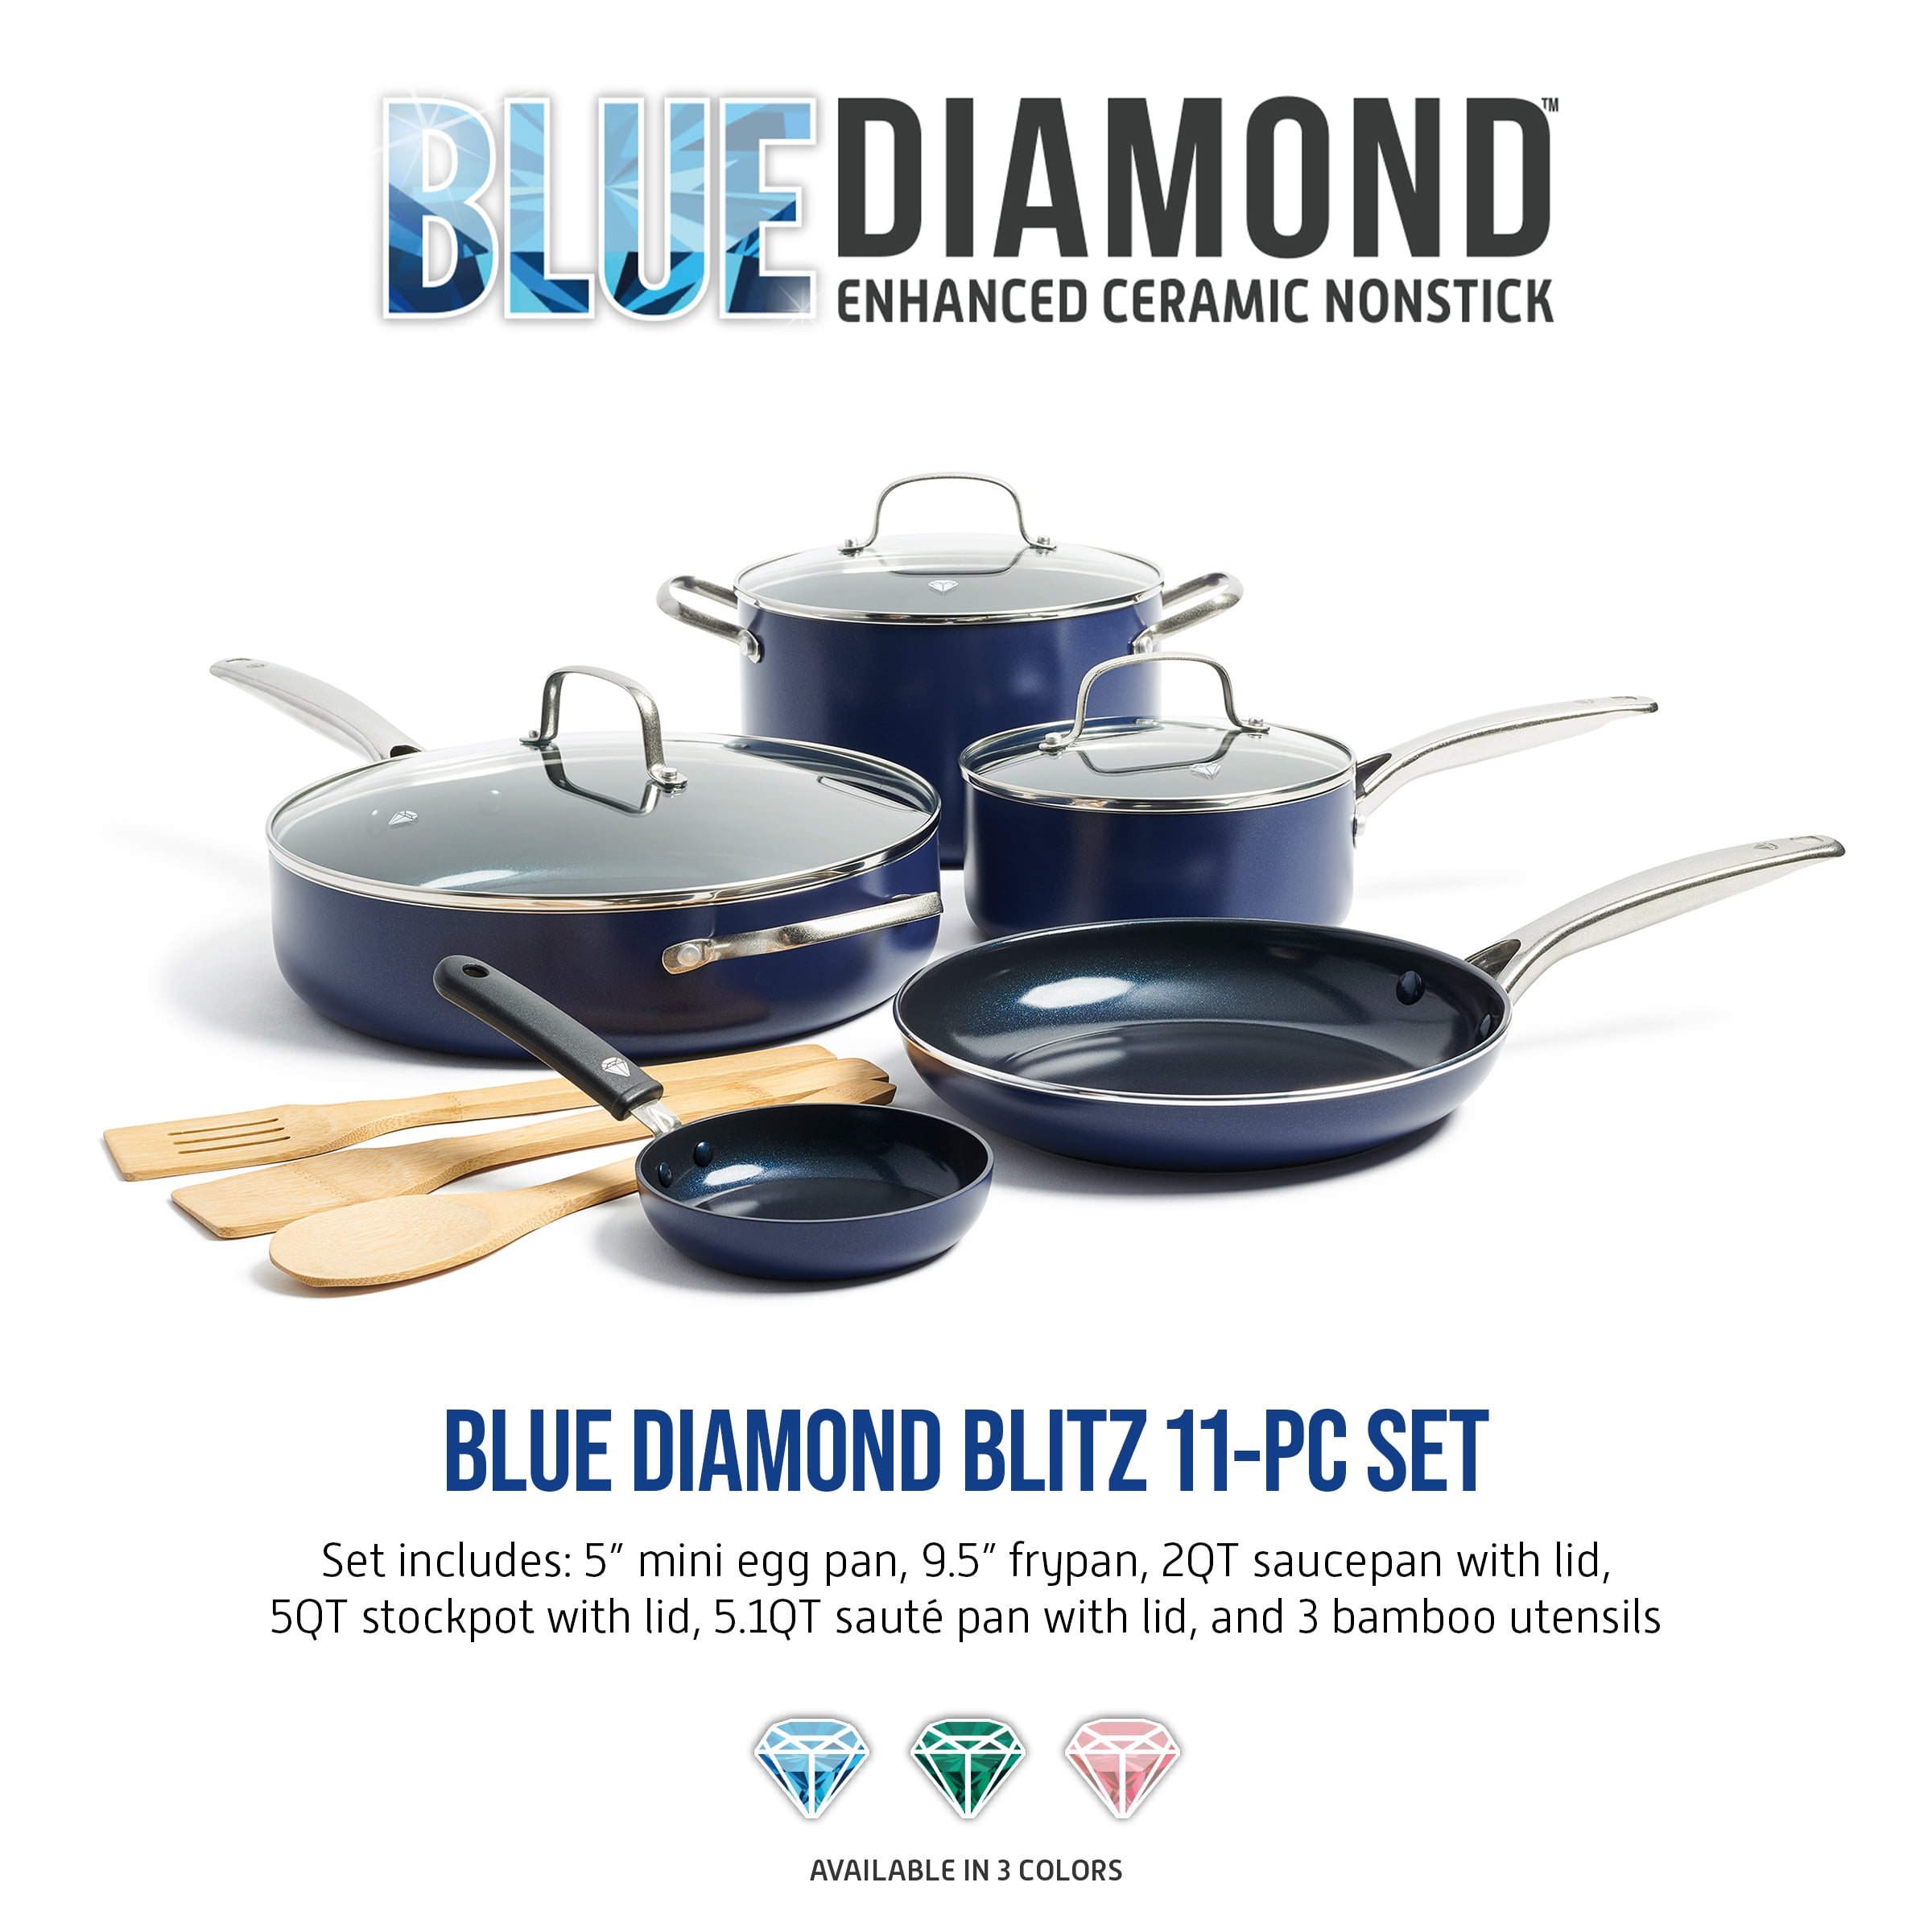 Blue Diamond Green Limited Edition Nonstick Ceramic 11-Piece